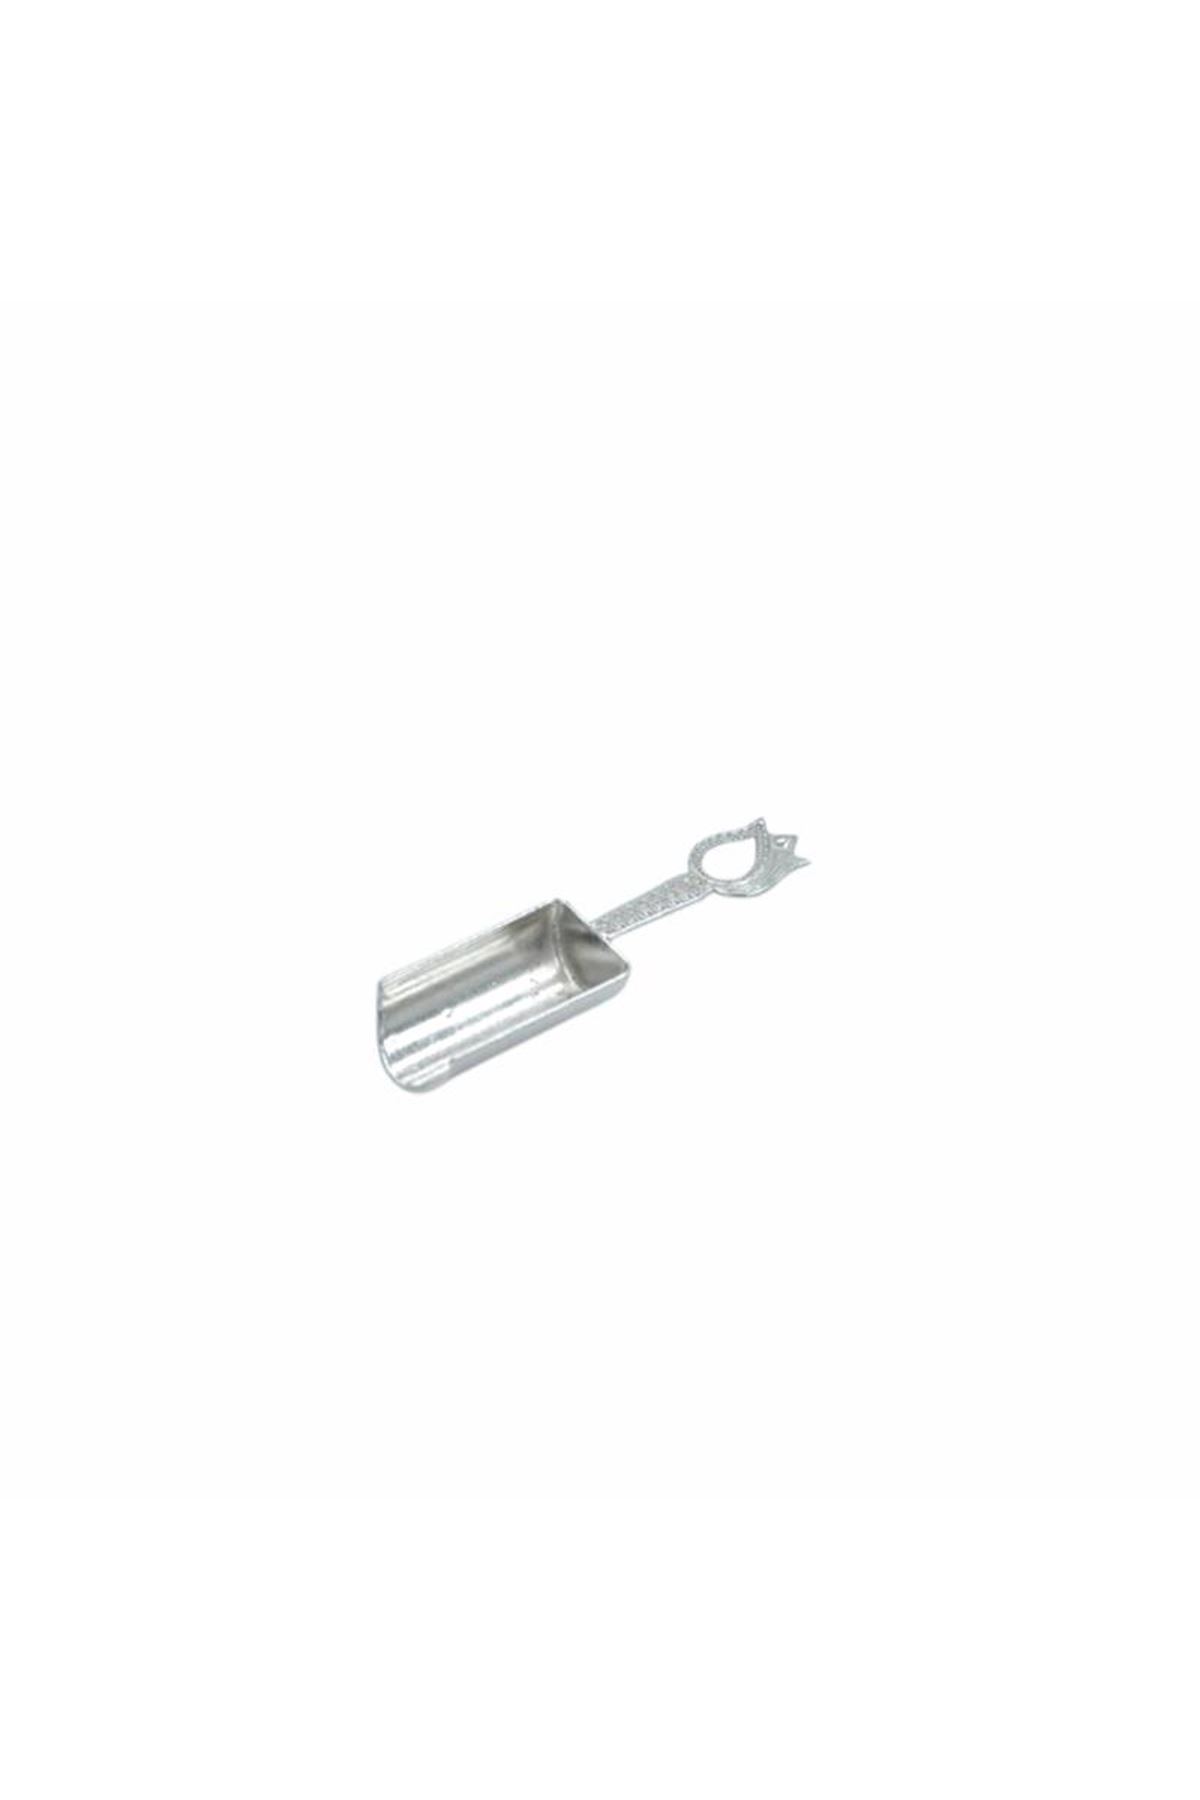 Ak Metal Mini Kürek Ölçek 8 Cm Sb002-H55 610261